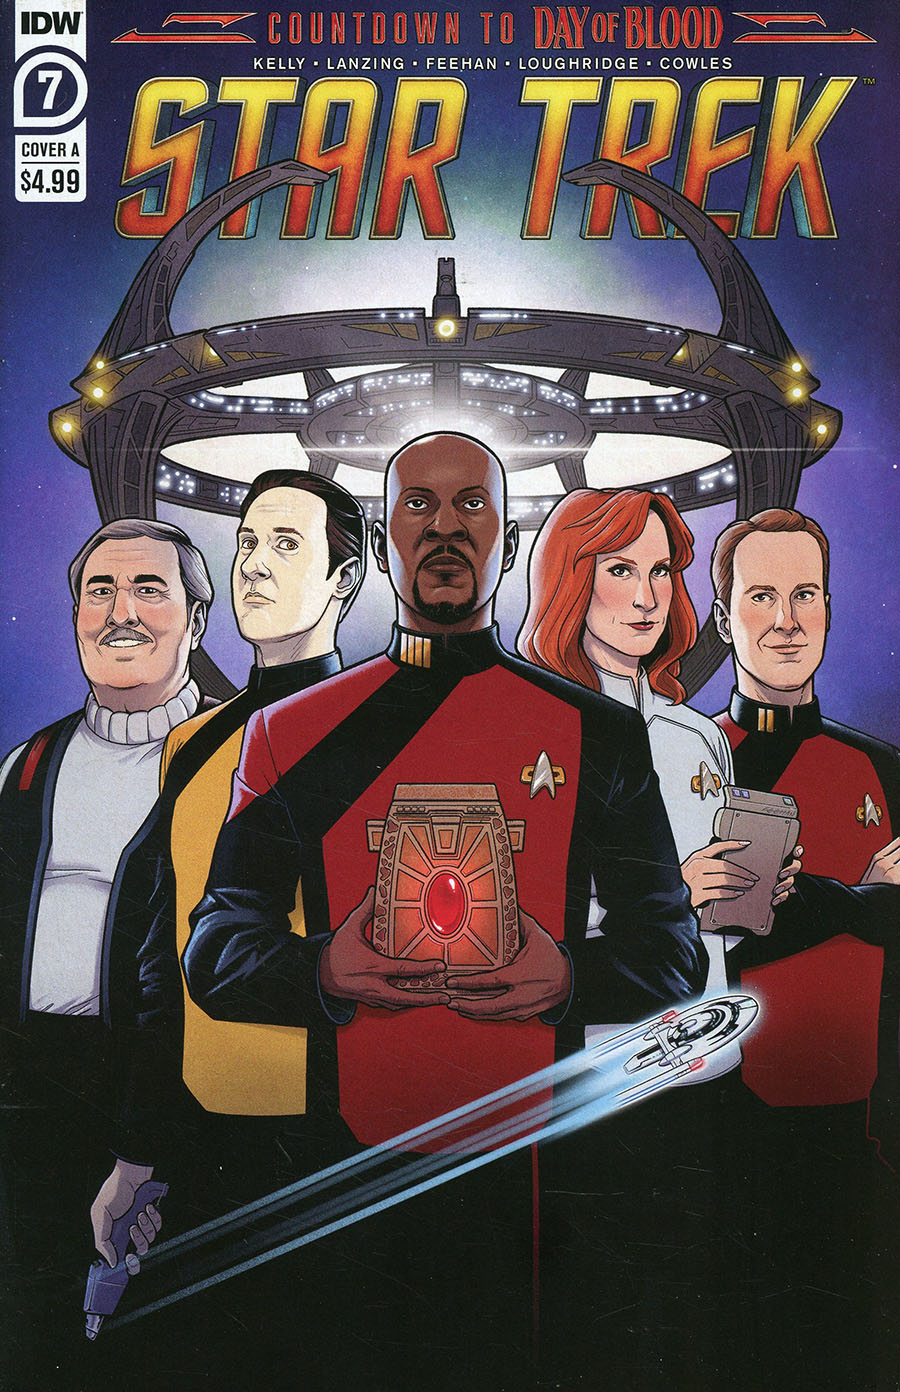 Star Trek (IDW) Vol 2 #7 Cover A Regular Mike Feehan Cover